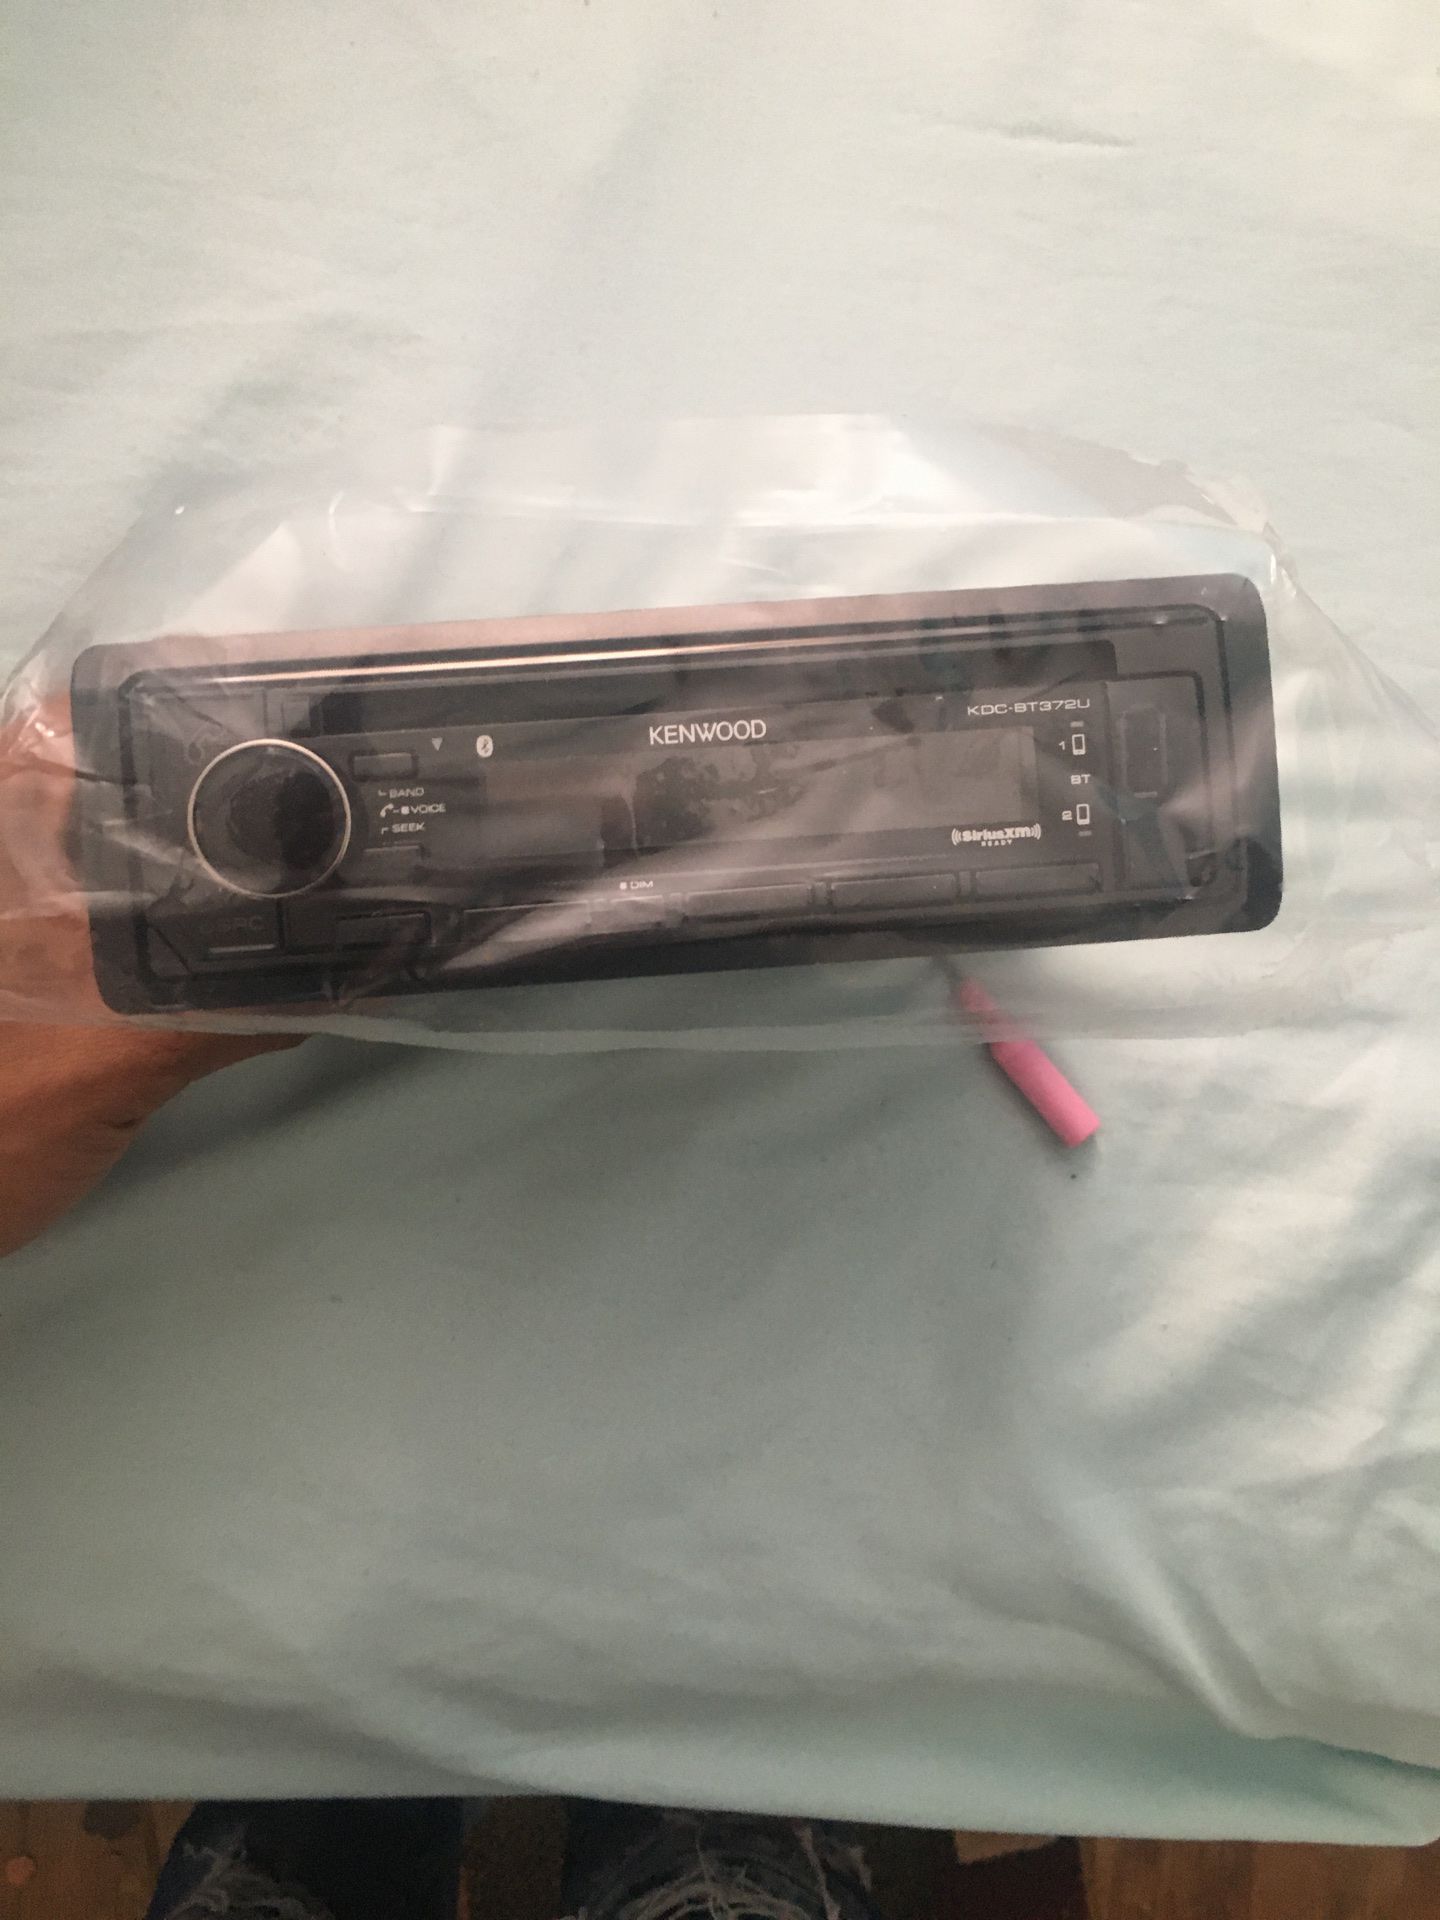 Brand new kenwood radio still in plastic (with warranty)